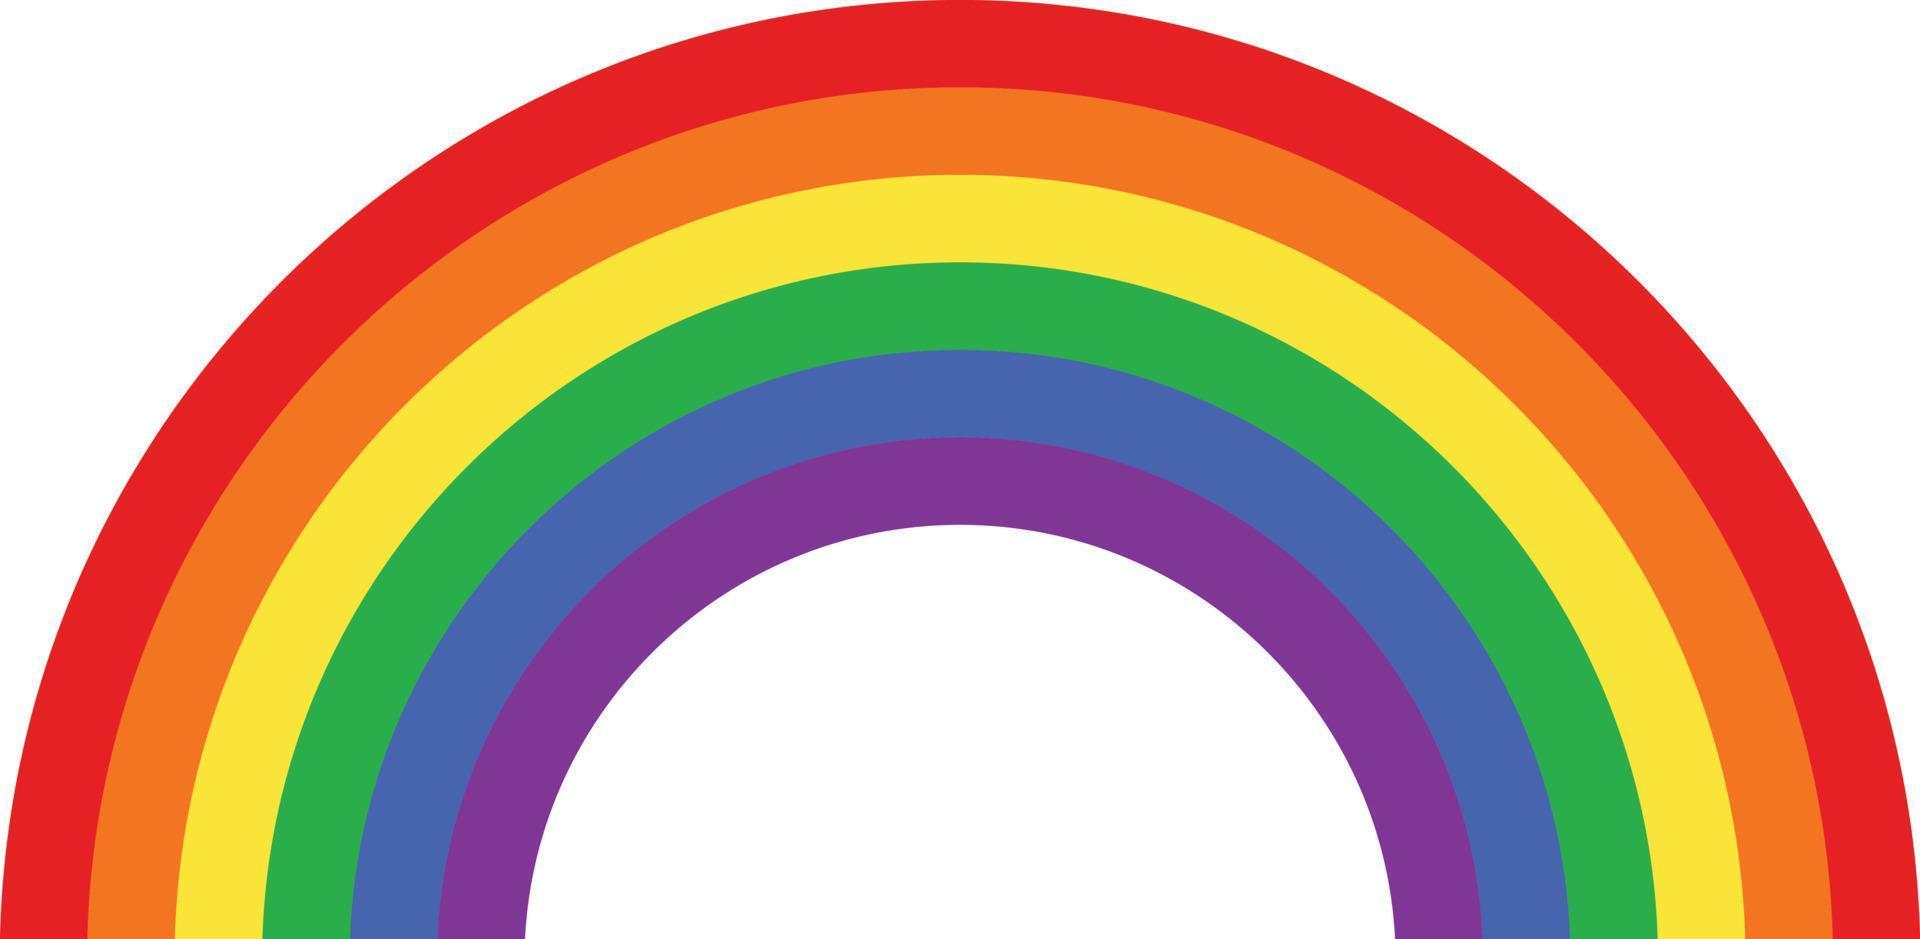 rainbow pride on white background. LGBT flag. rainbow sign. rainbow icon Gay or LGBT. flat style. vector